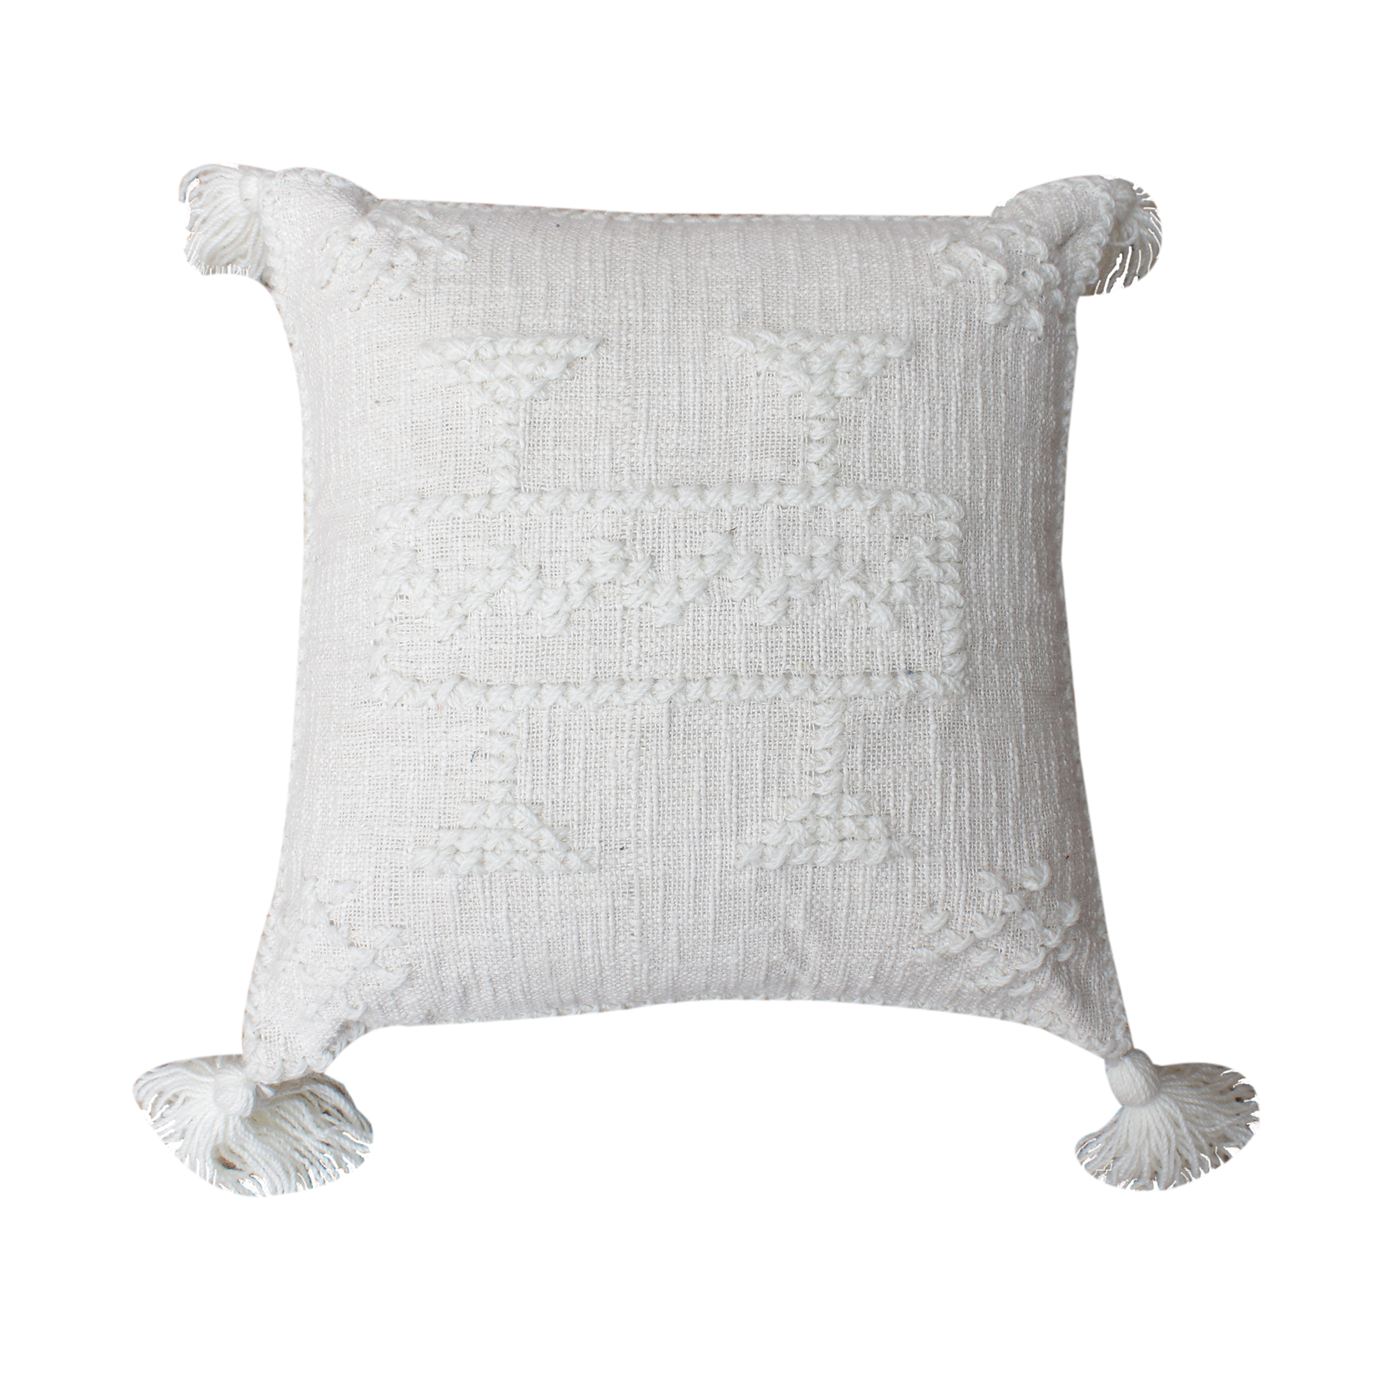 Vina Cushion, Cotton, Nz Wool, Natural White, Hm Stitching, Flat Weave